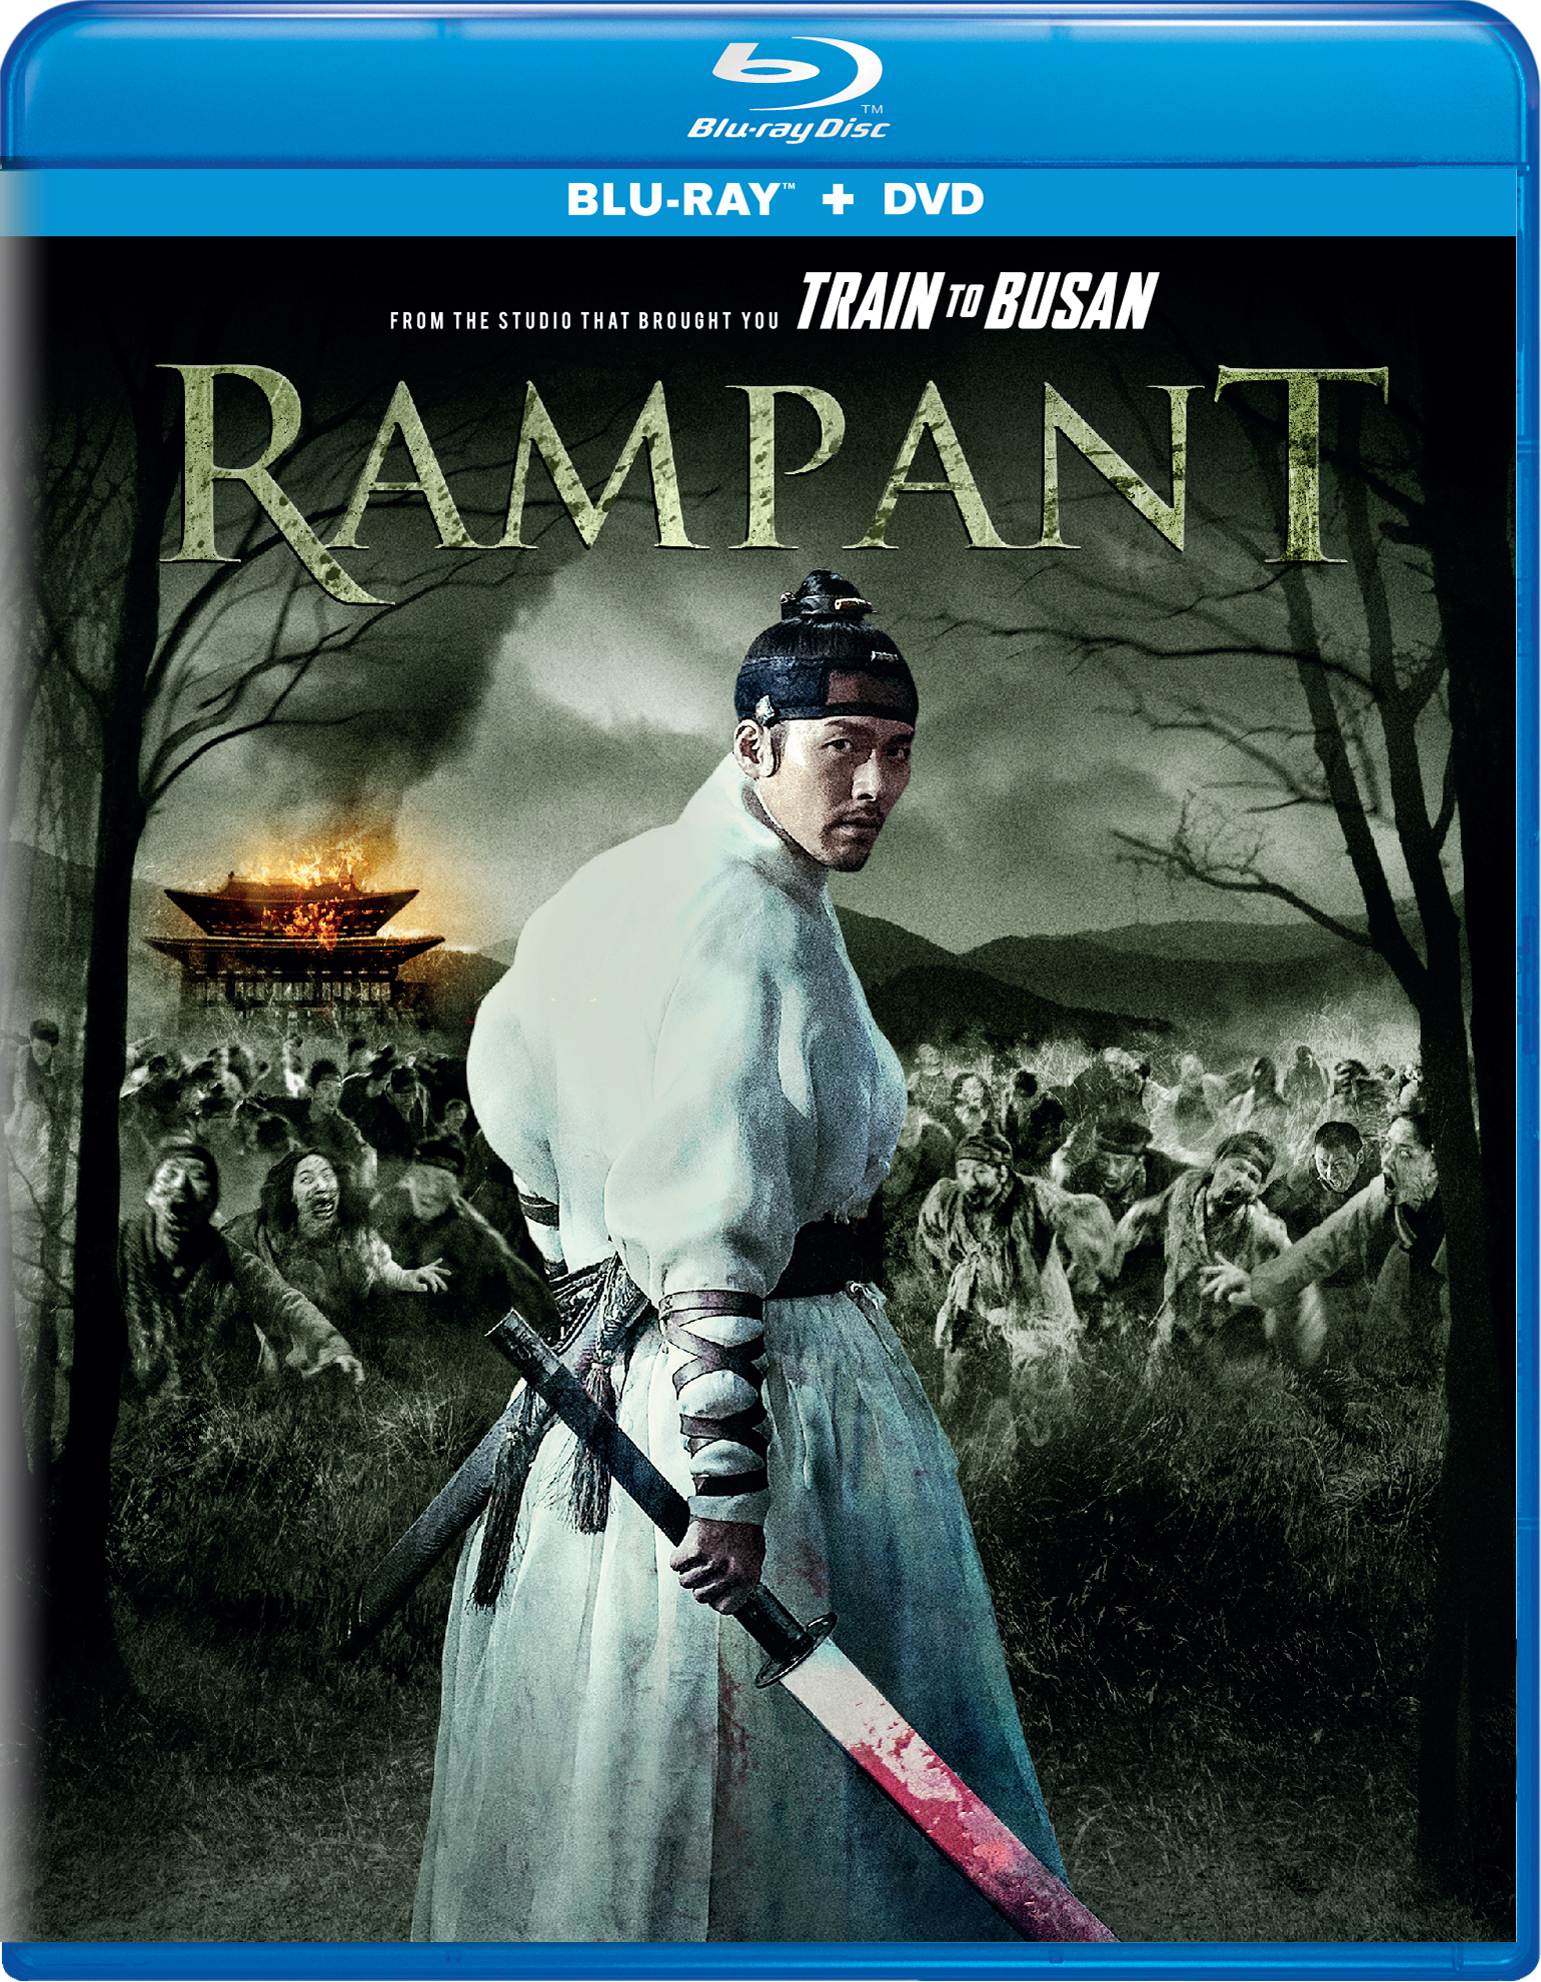 Rampant (with DVD) - Blu-ray [ 2018 ]  - Horror Movies On Blu-ray - Movies On GRUV